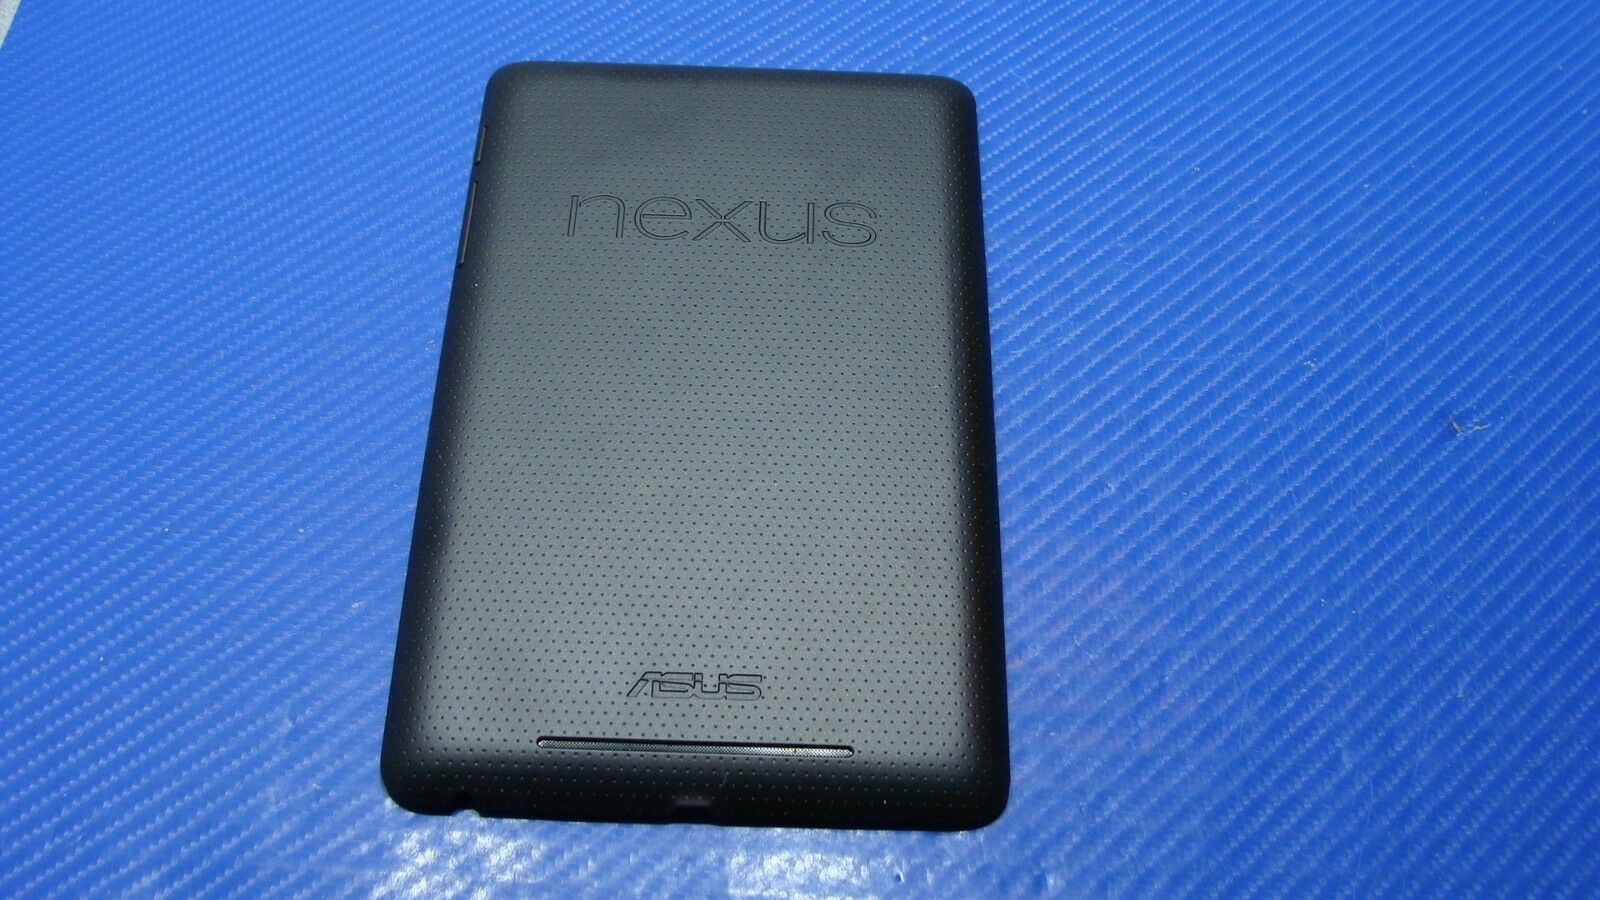 Asus Nexus 7 1B001A 32GB 7